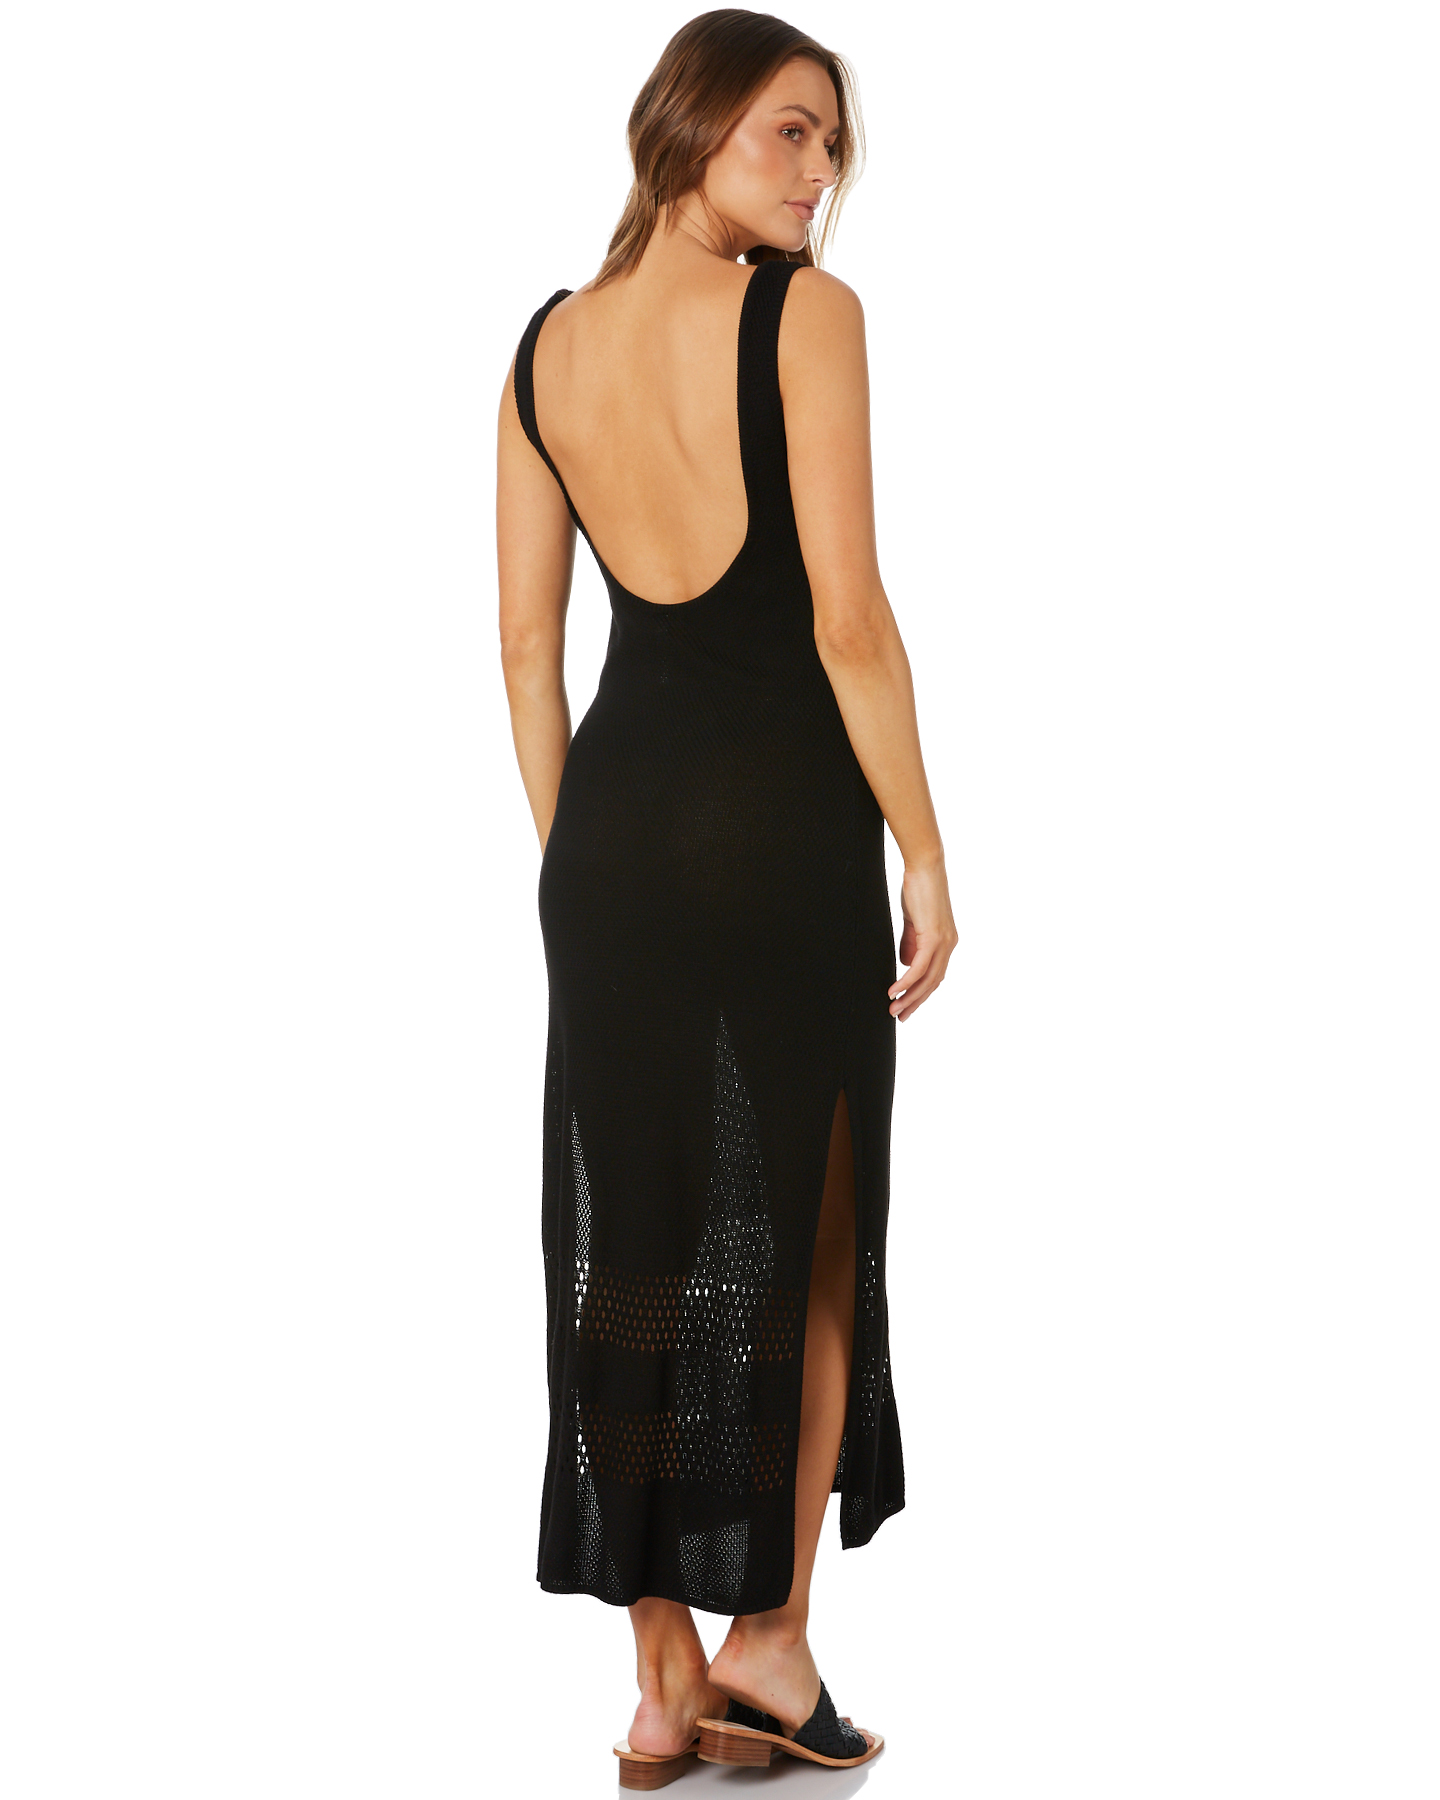 Seafolly Terrain Knit Dress - Black | SurfStitch